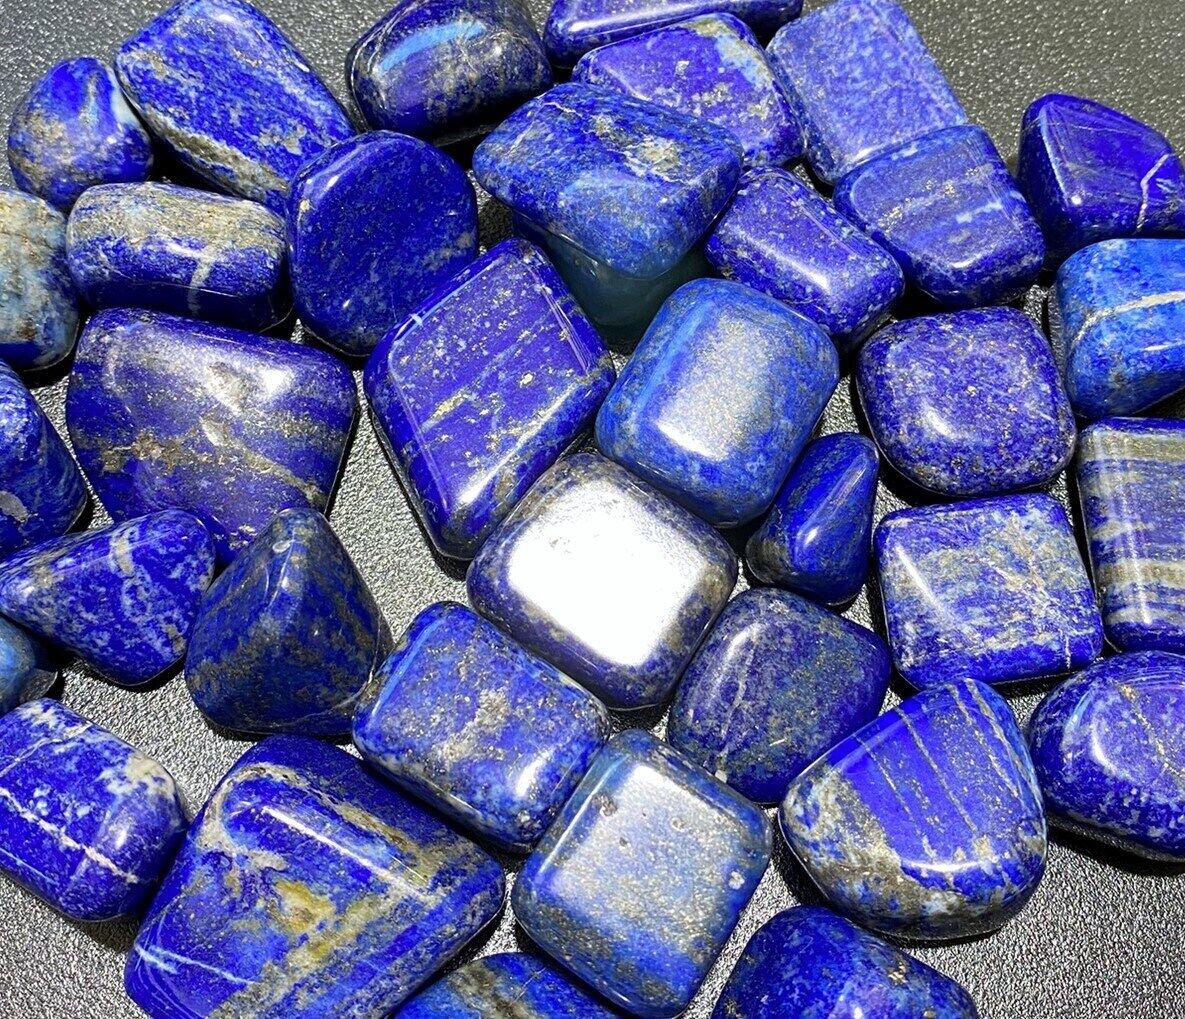 Bulk Wholesale Lot 1 LB Tumbled Lapis Lazuli One Pound Polished Stones Natural